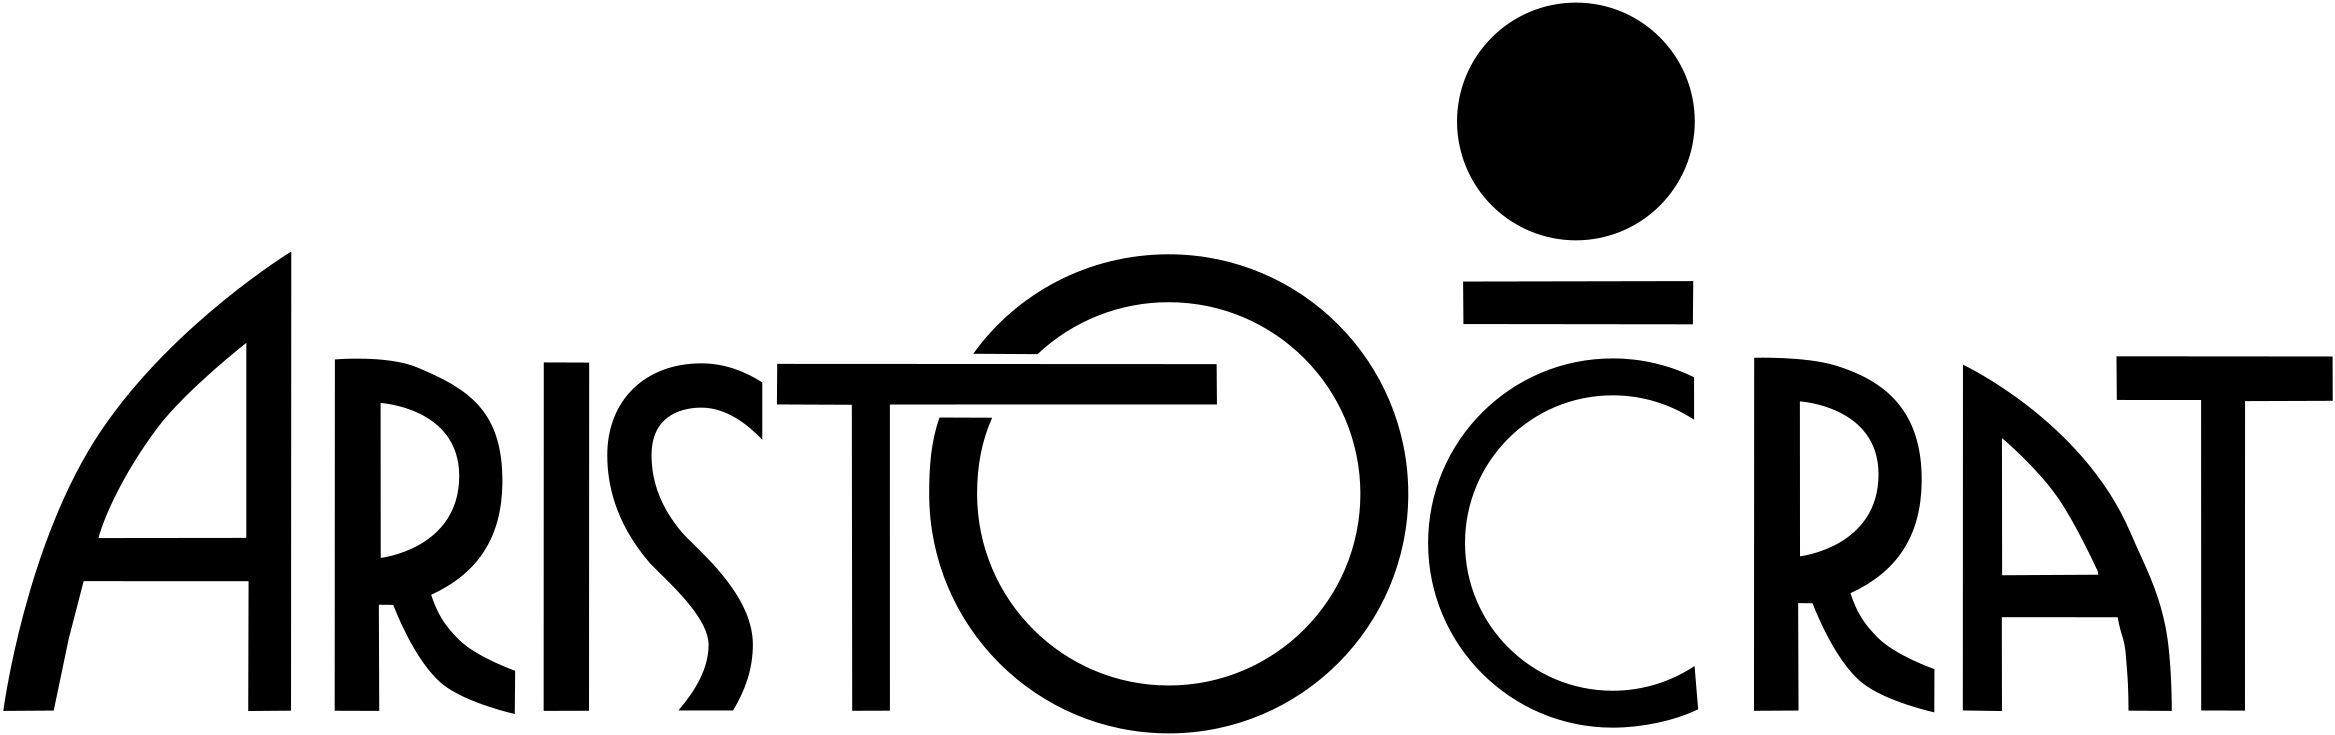 Aristocrat Logo - NextMapping